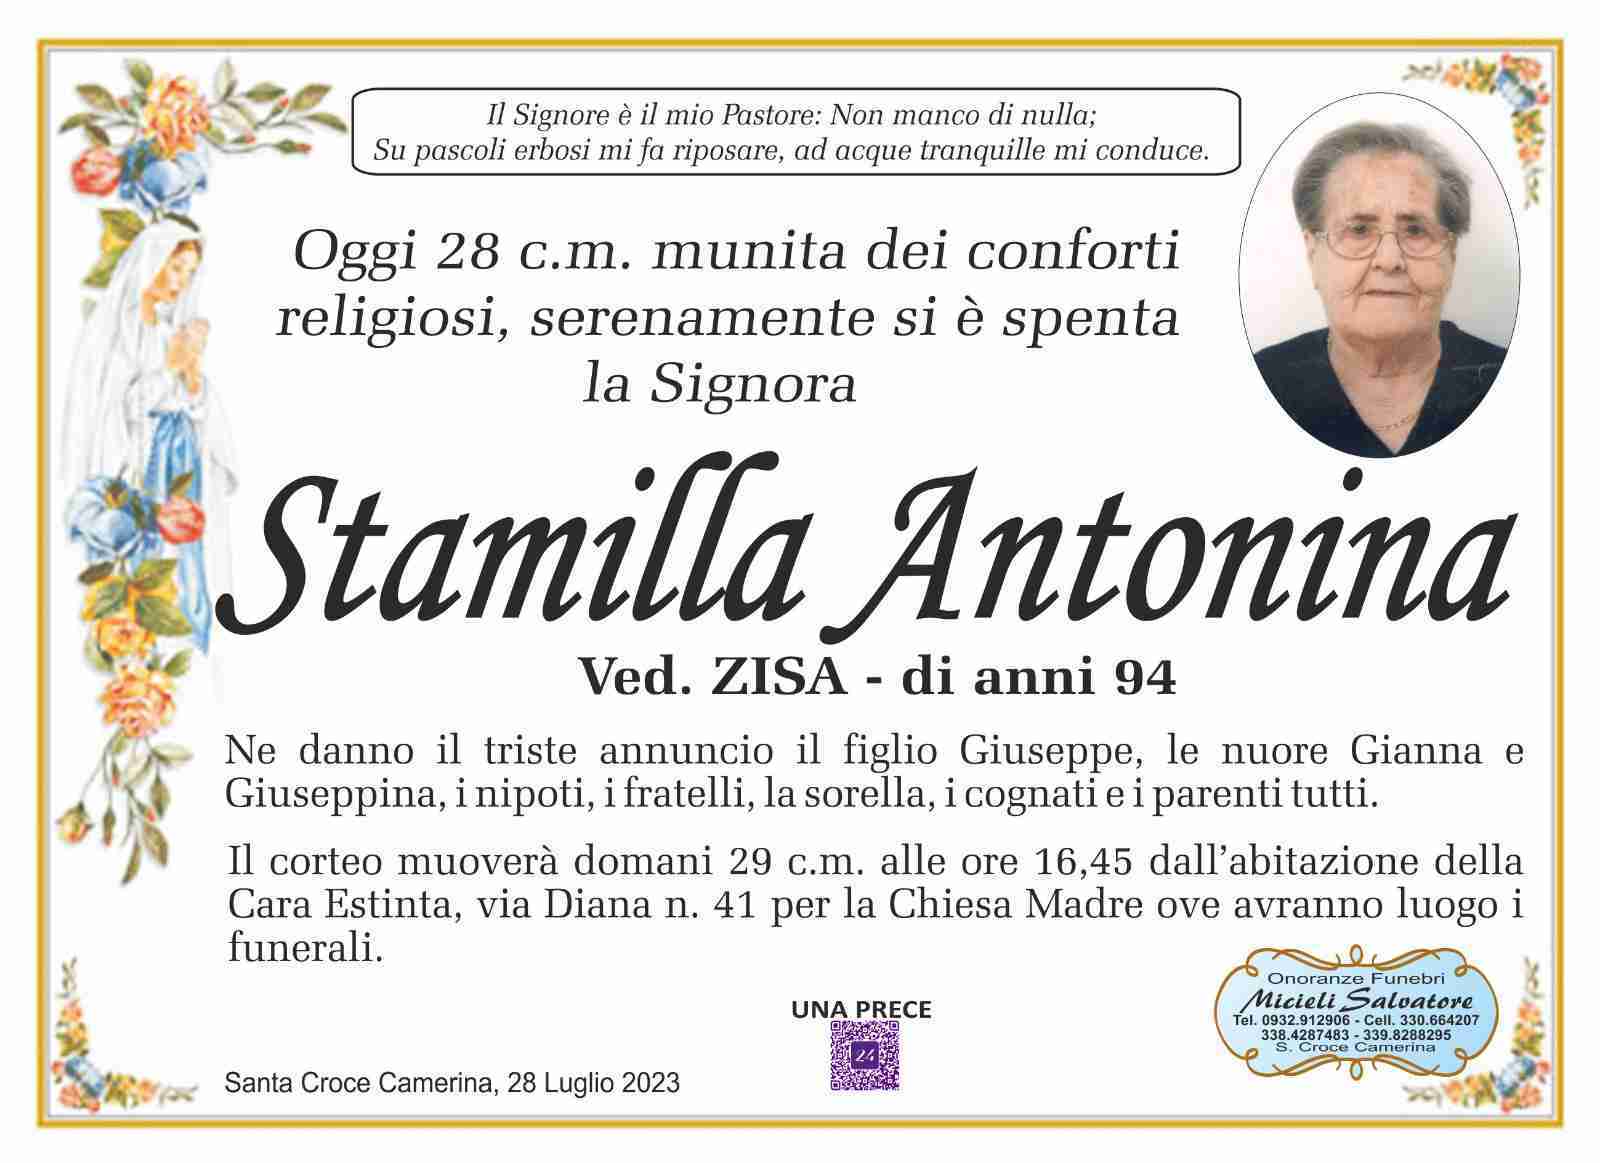 Antonina Stamilla